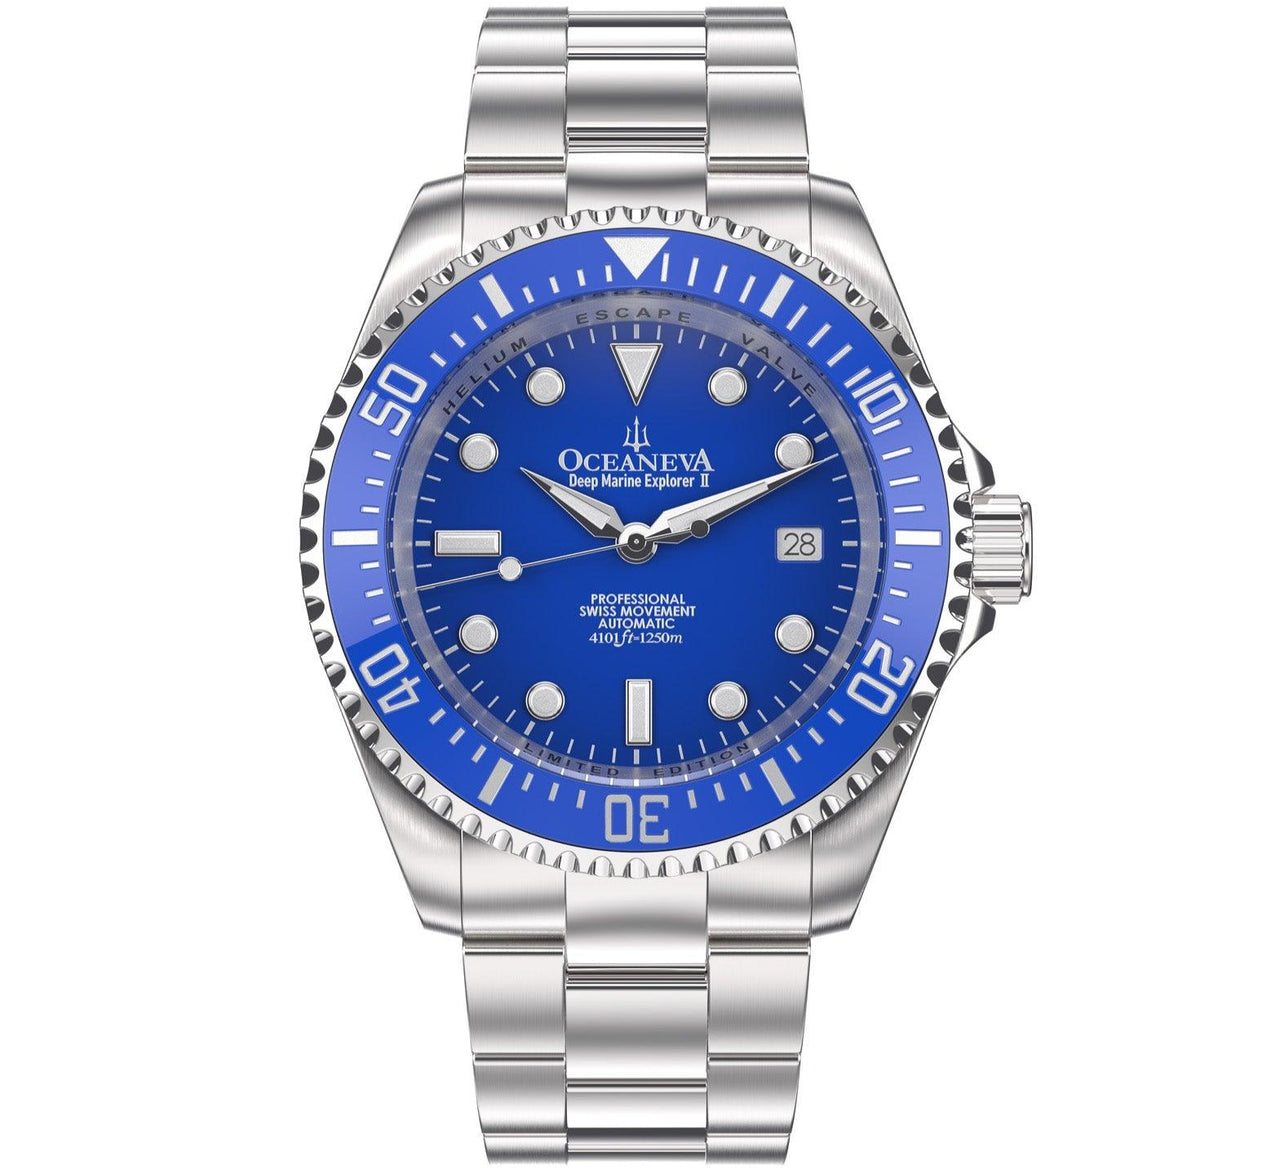 Oceaneva Men's Deep Marine Explorer II 1250M Pro Diver Watch Blue - BLII200BLST 1000M, 1250M, 316L Stainless Steel Watch, Automatic Watch, BGW9 Swiss-Superluminova, Ceramic Bezel, Dive Watch, Sw200-1 Swiss Automatic Movement